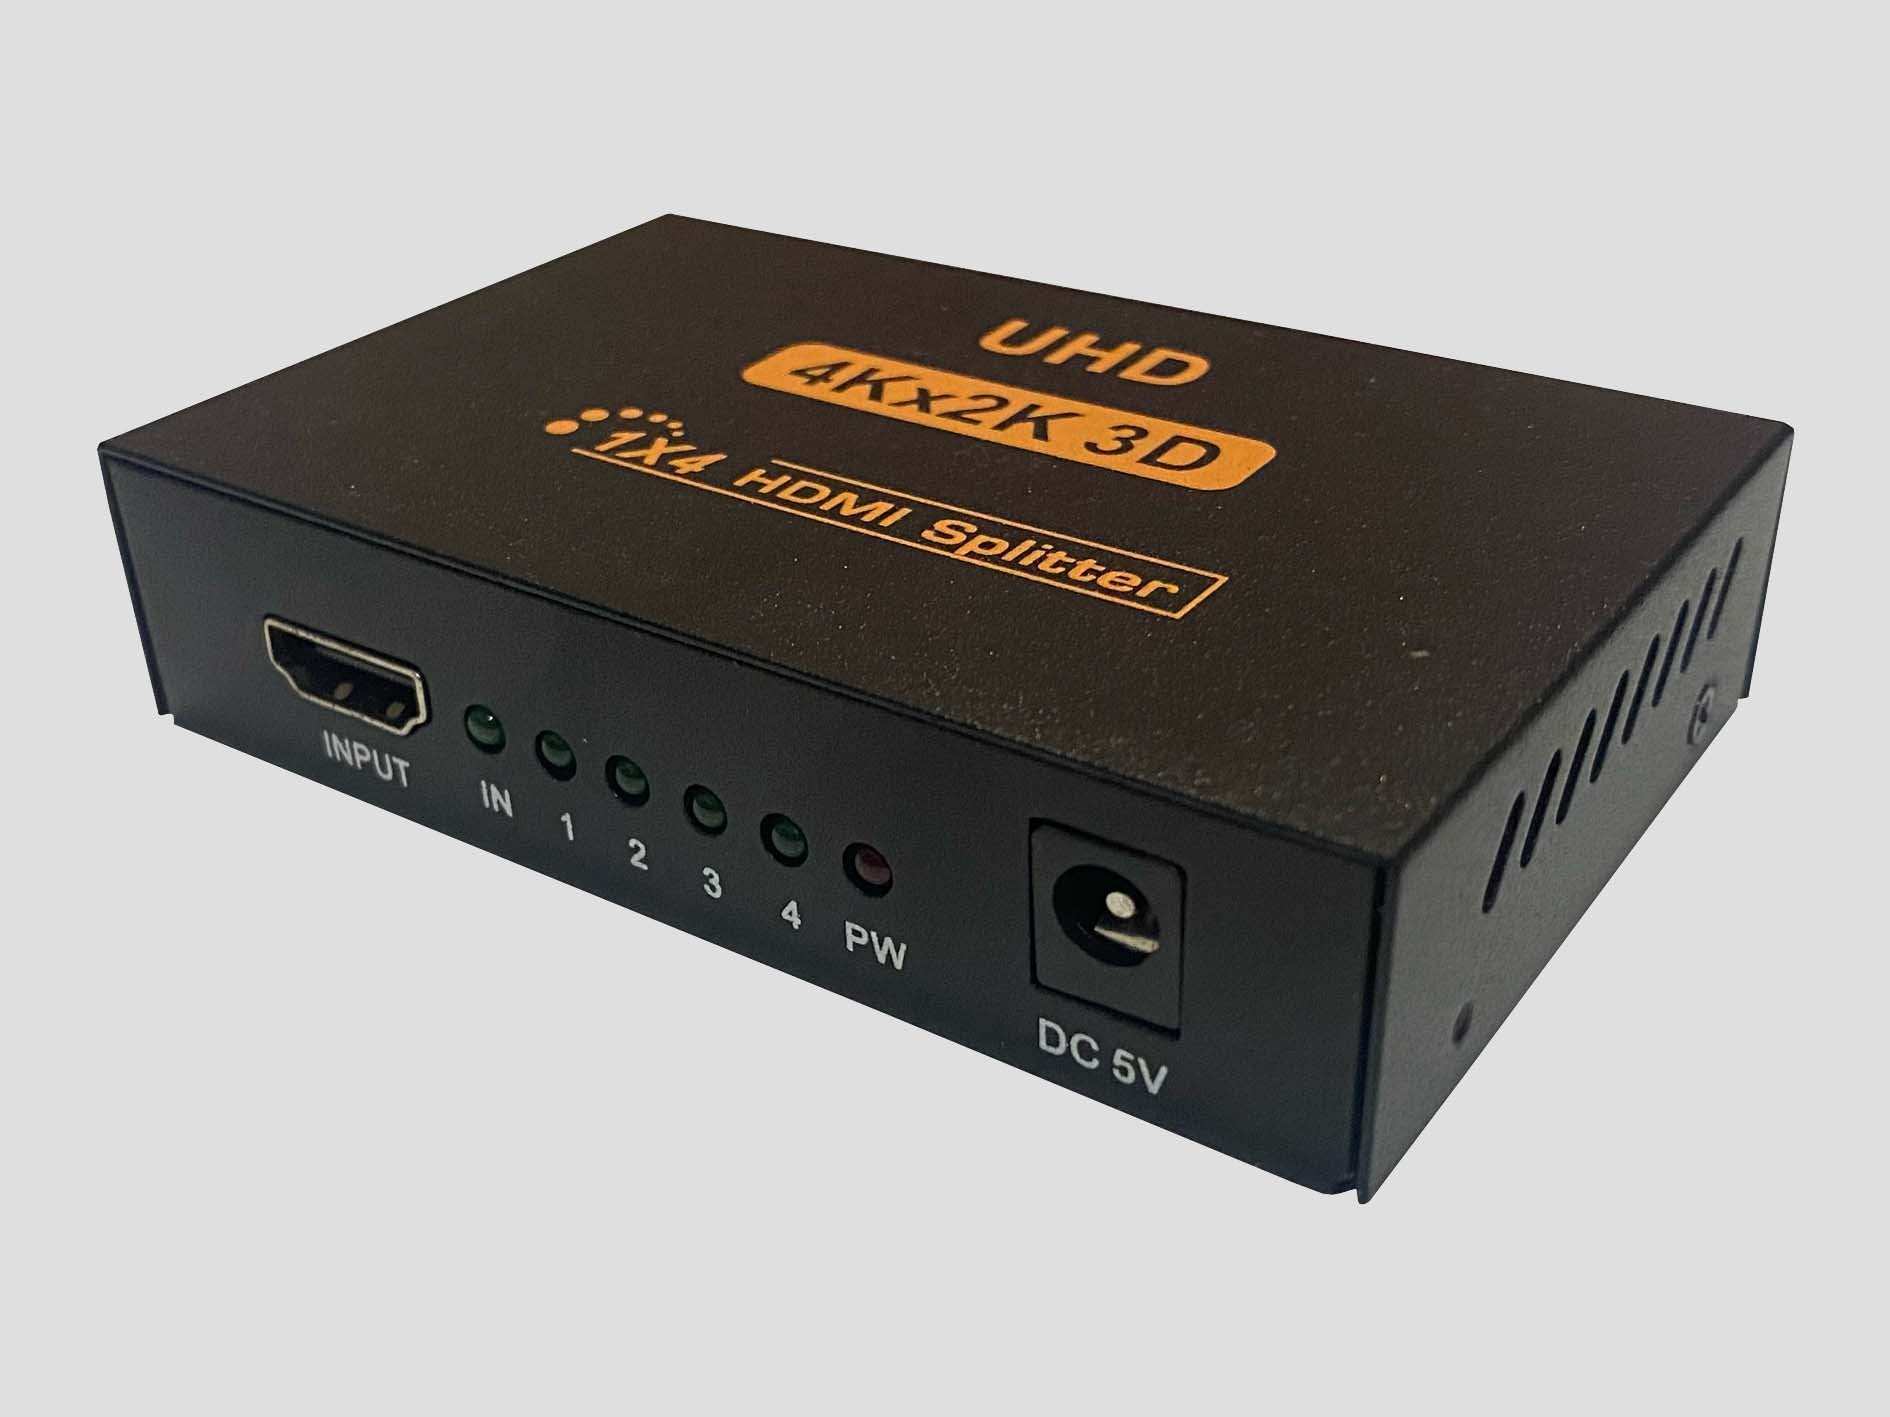 HDMI Splitter - 1 INPUT to 4 OUTPUT